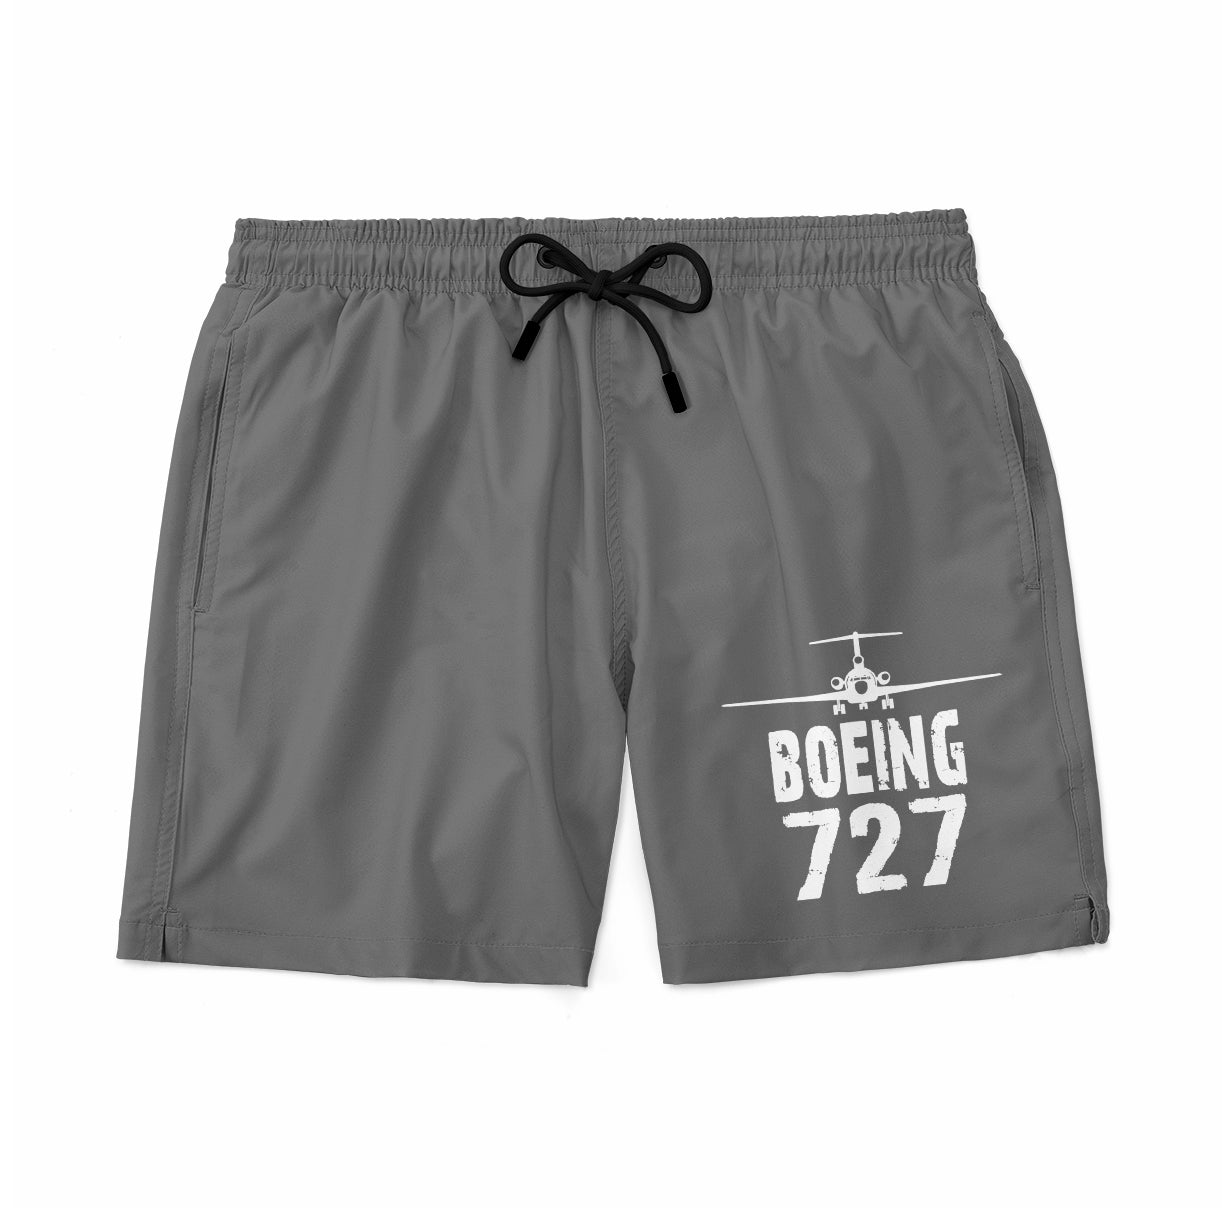 Boeing 727 & Plane Designed Swim Trunks & Shorts